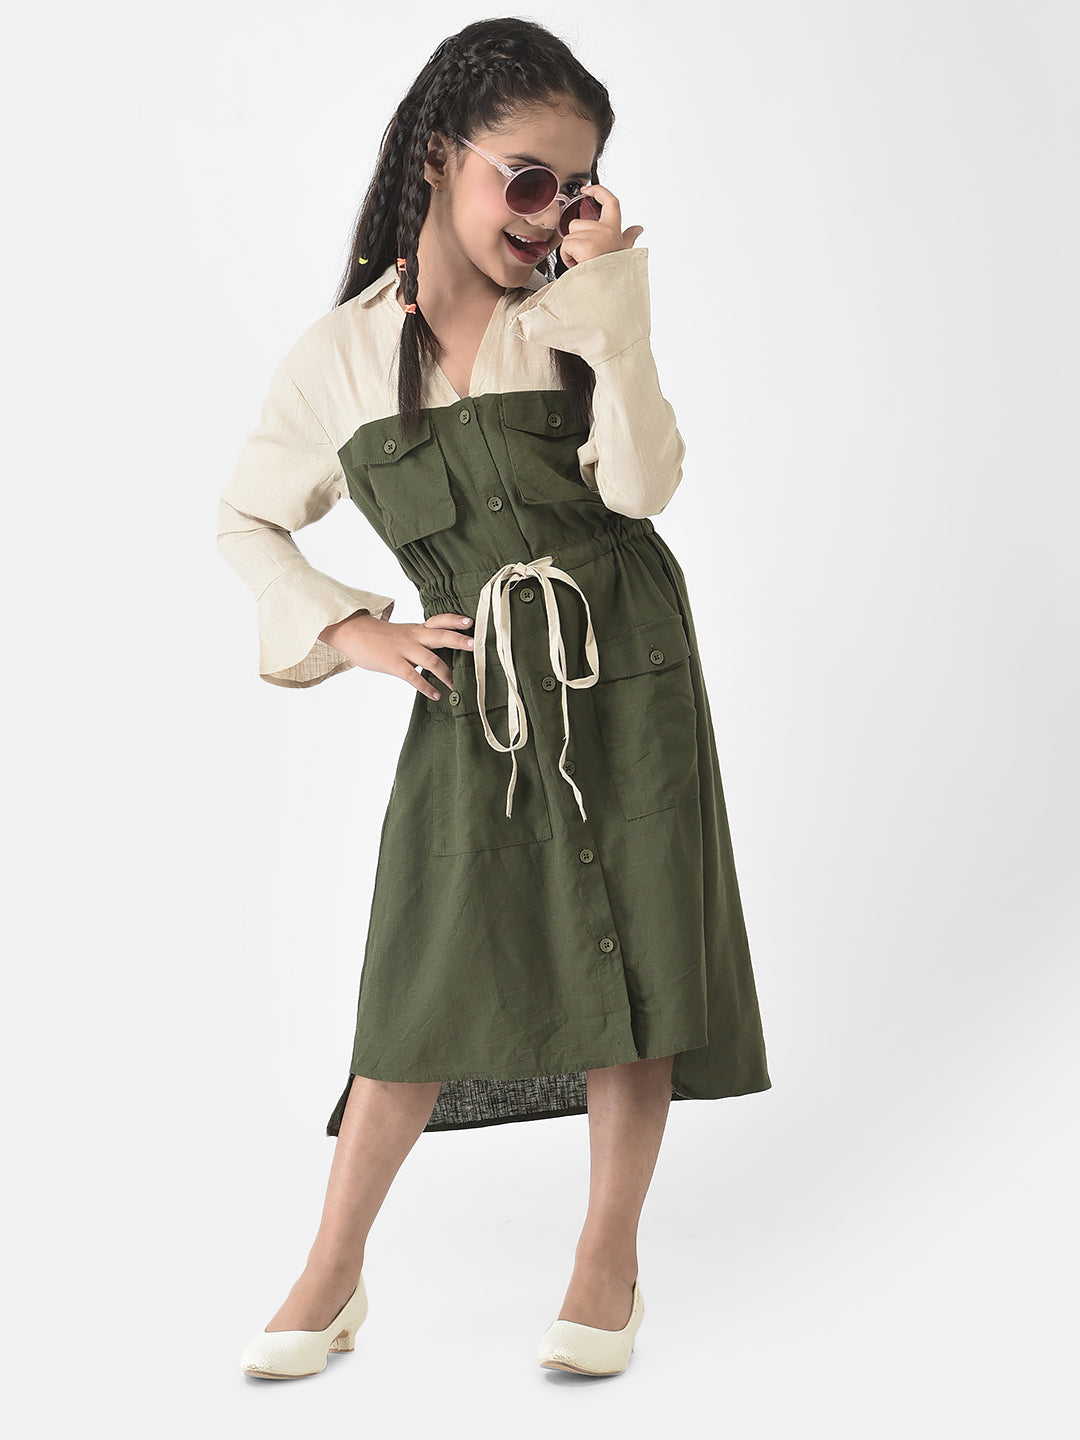  Olive Dress with Patch Pocket Detailing 